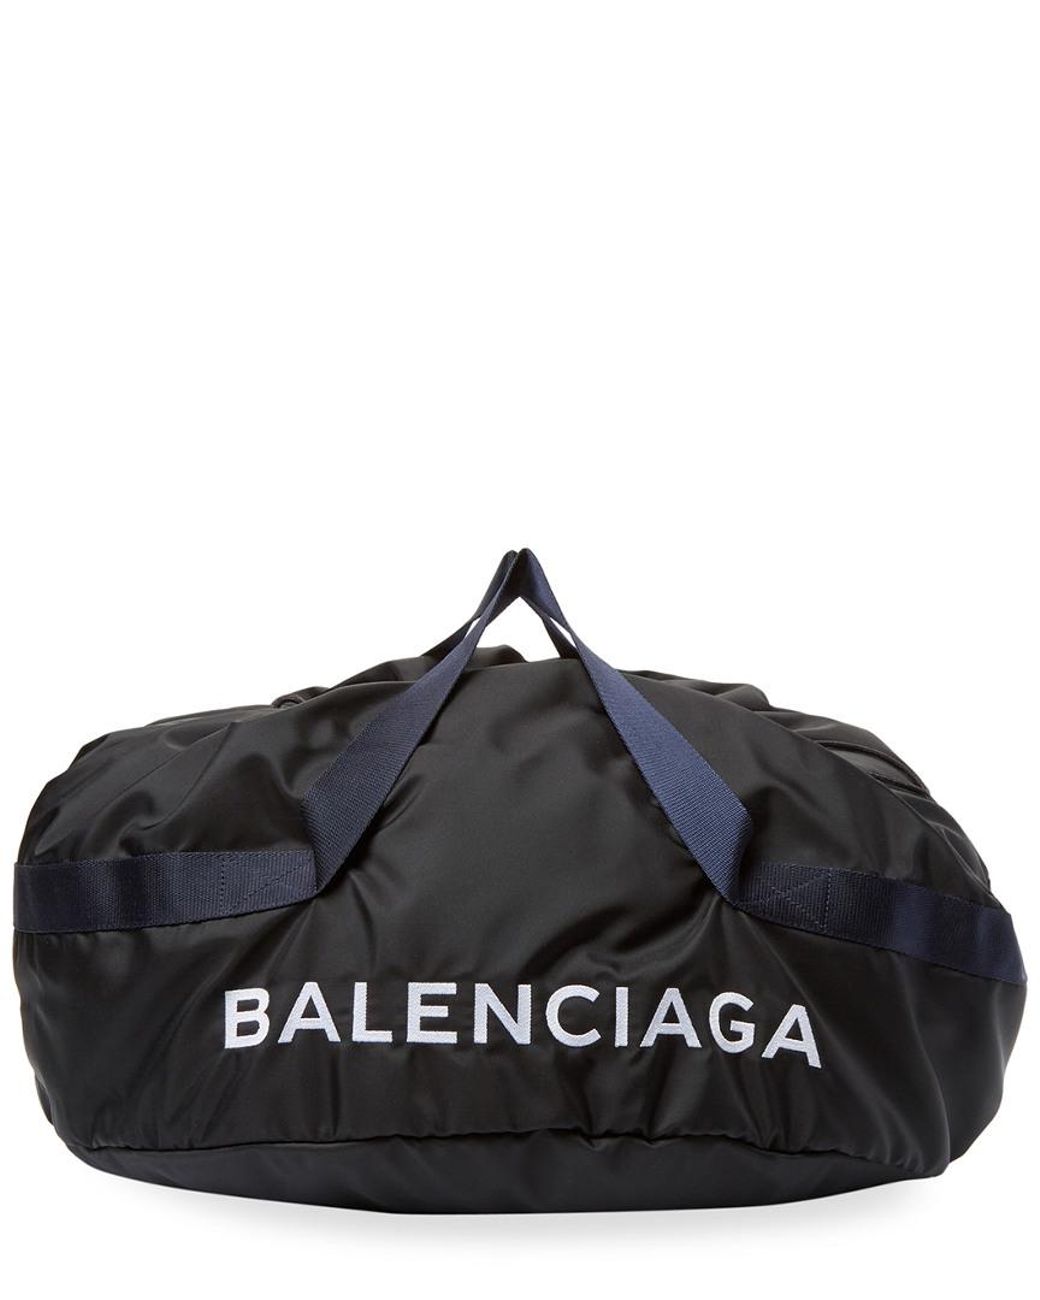 Balenciaga Wheel Bag Medium Nylon Duffle in Black | Lyst